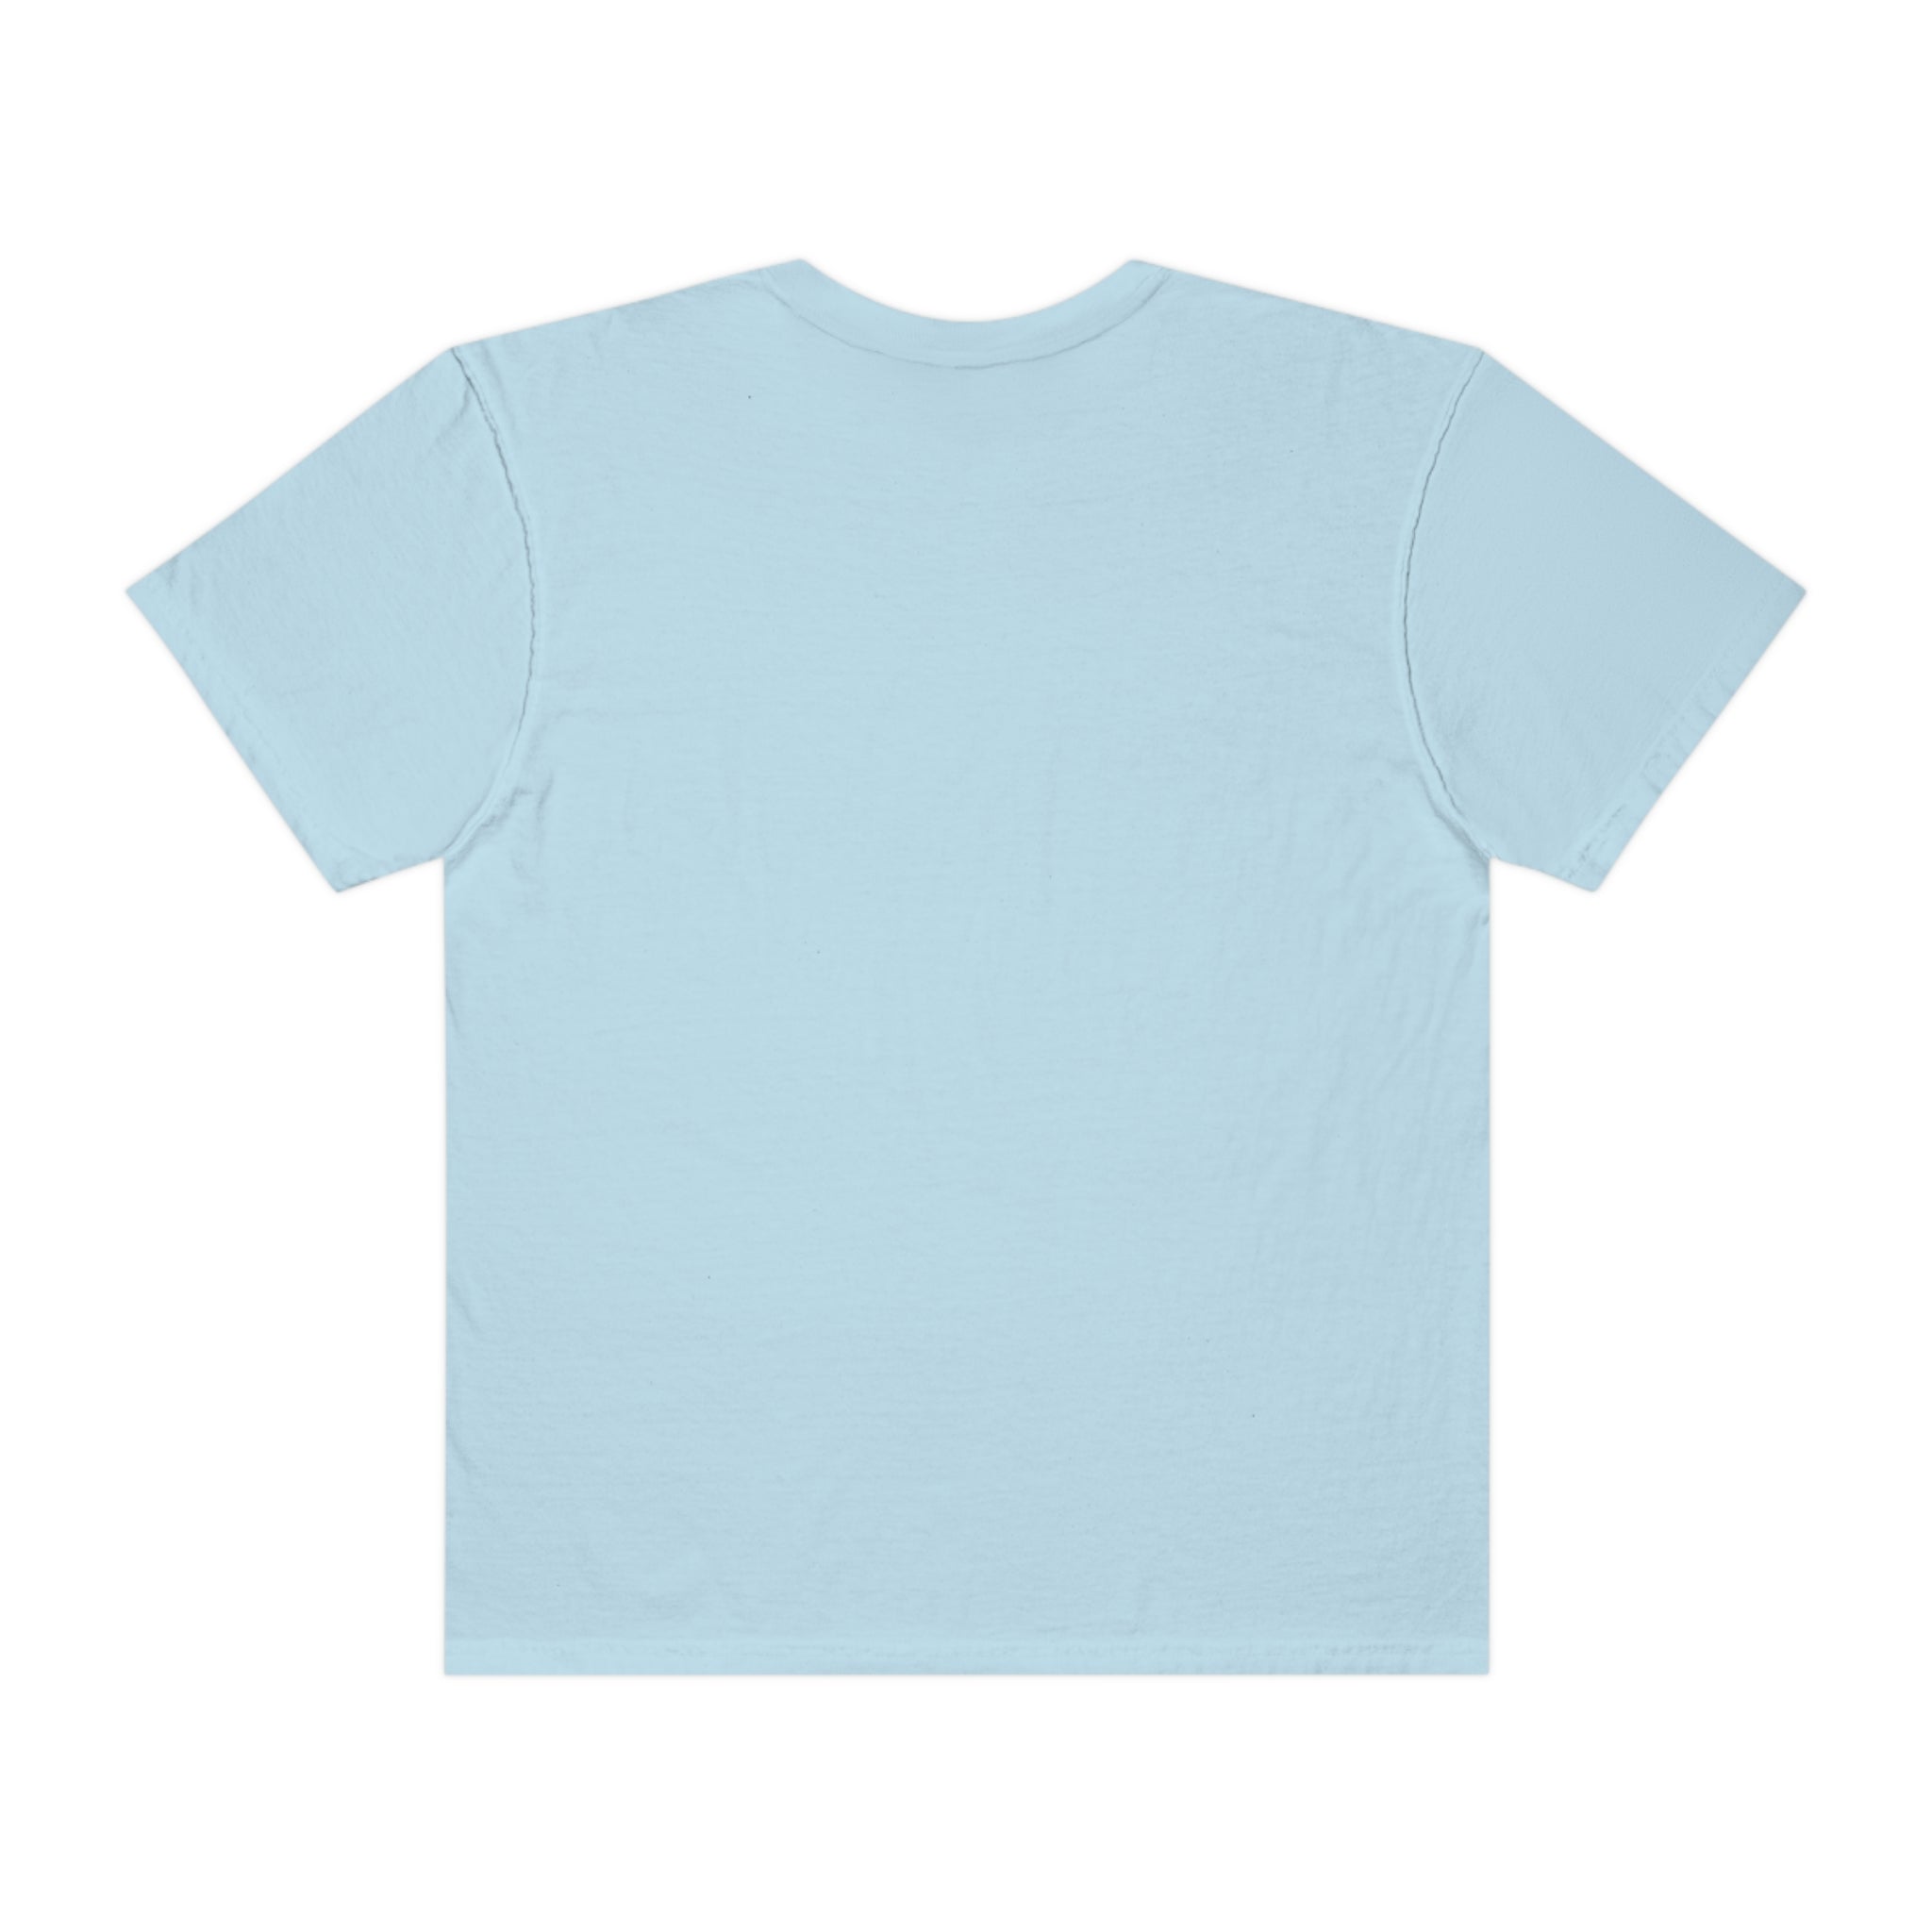 Printify T-Shirt Limited Edition Shirt - Customized Year - Unisex Garment-Dyed T-shirt